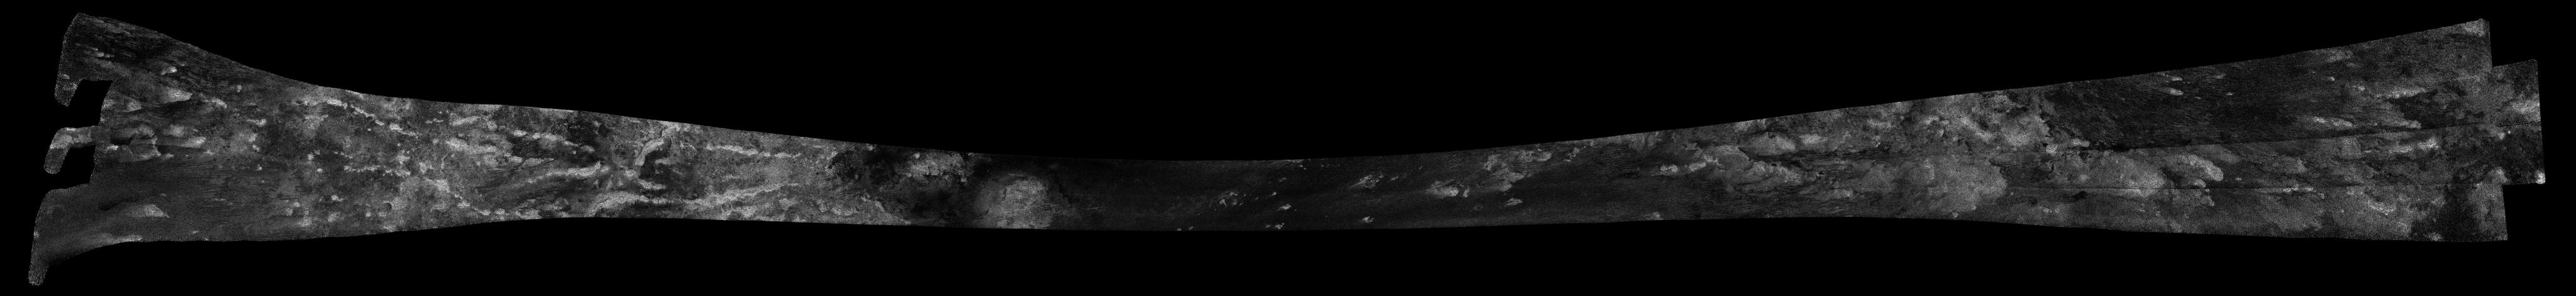 Titan radar image